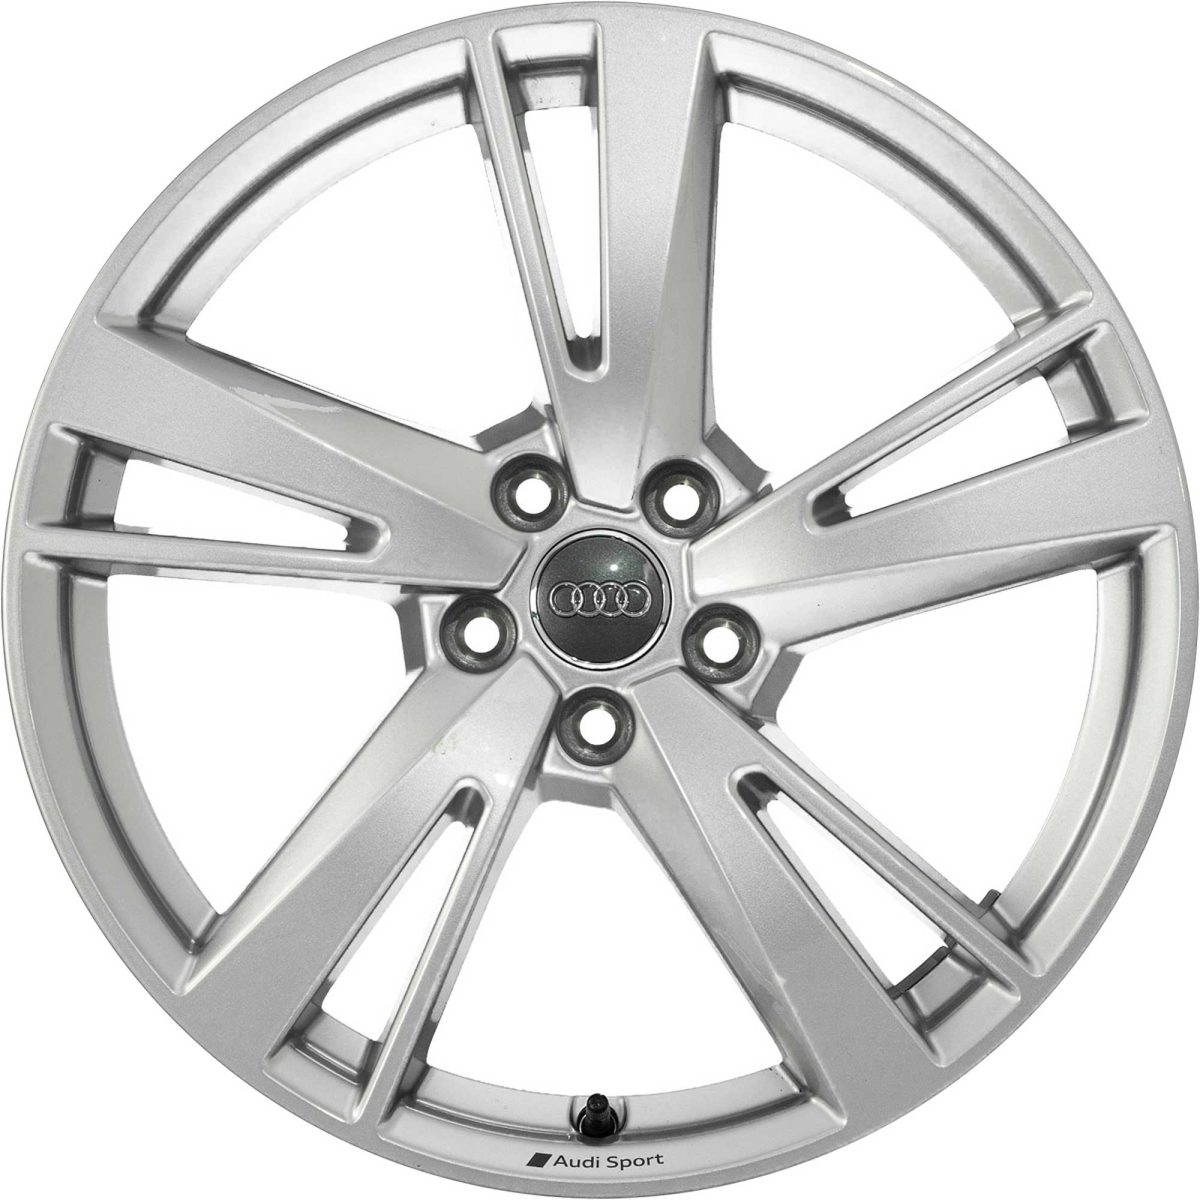 Genuine Audi RS3 8V 5 Spoke Blade 19" Inch Alloy Wheels with Silver Finish 8V0 601 025 FL, 8V0 601 025 FH